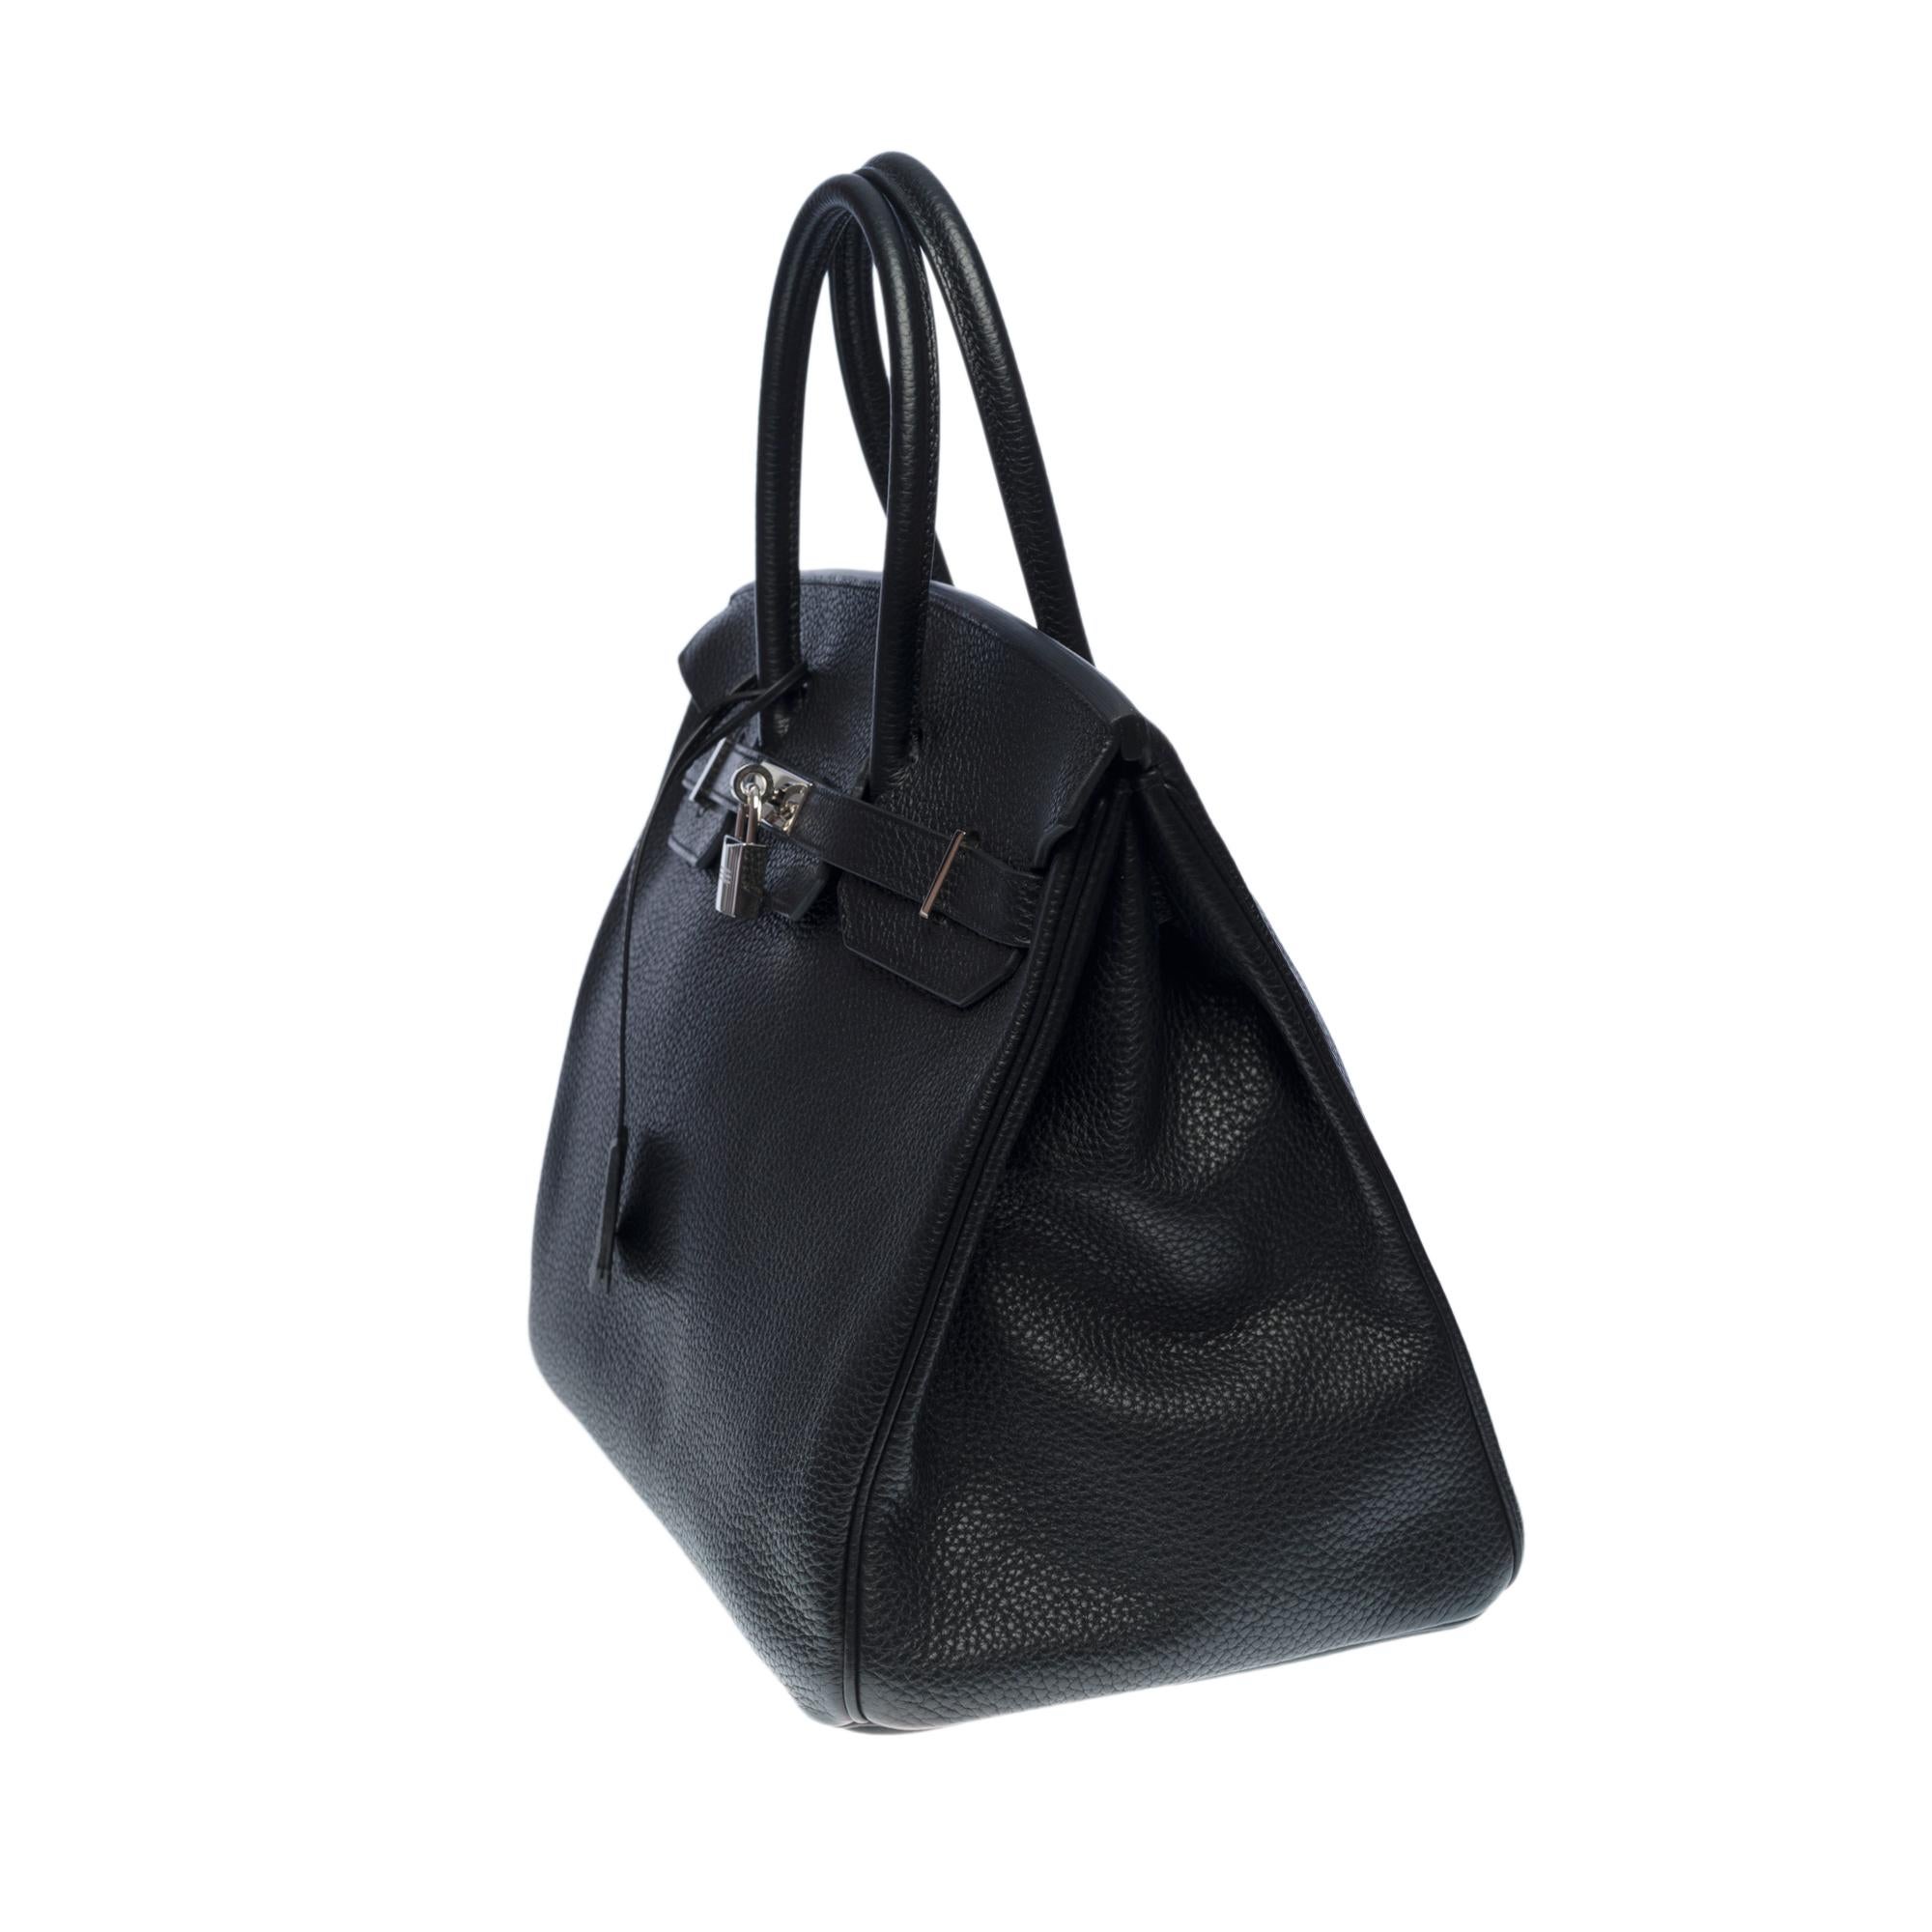 Black Beautiful Hermès Birkin 35 handbag in black Togo leather, silver hardware